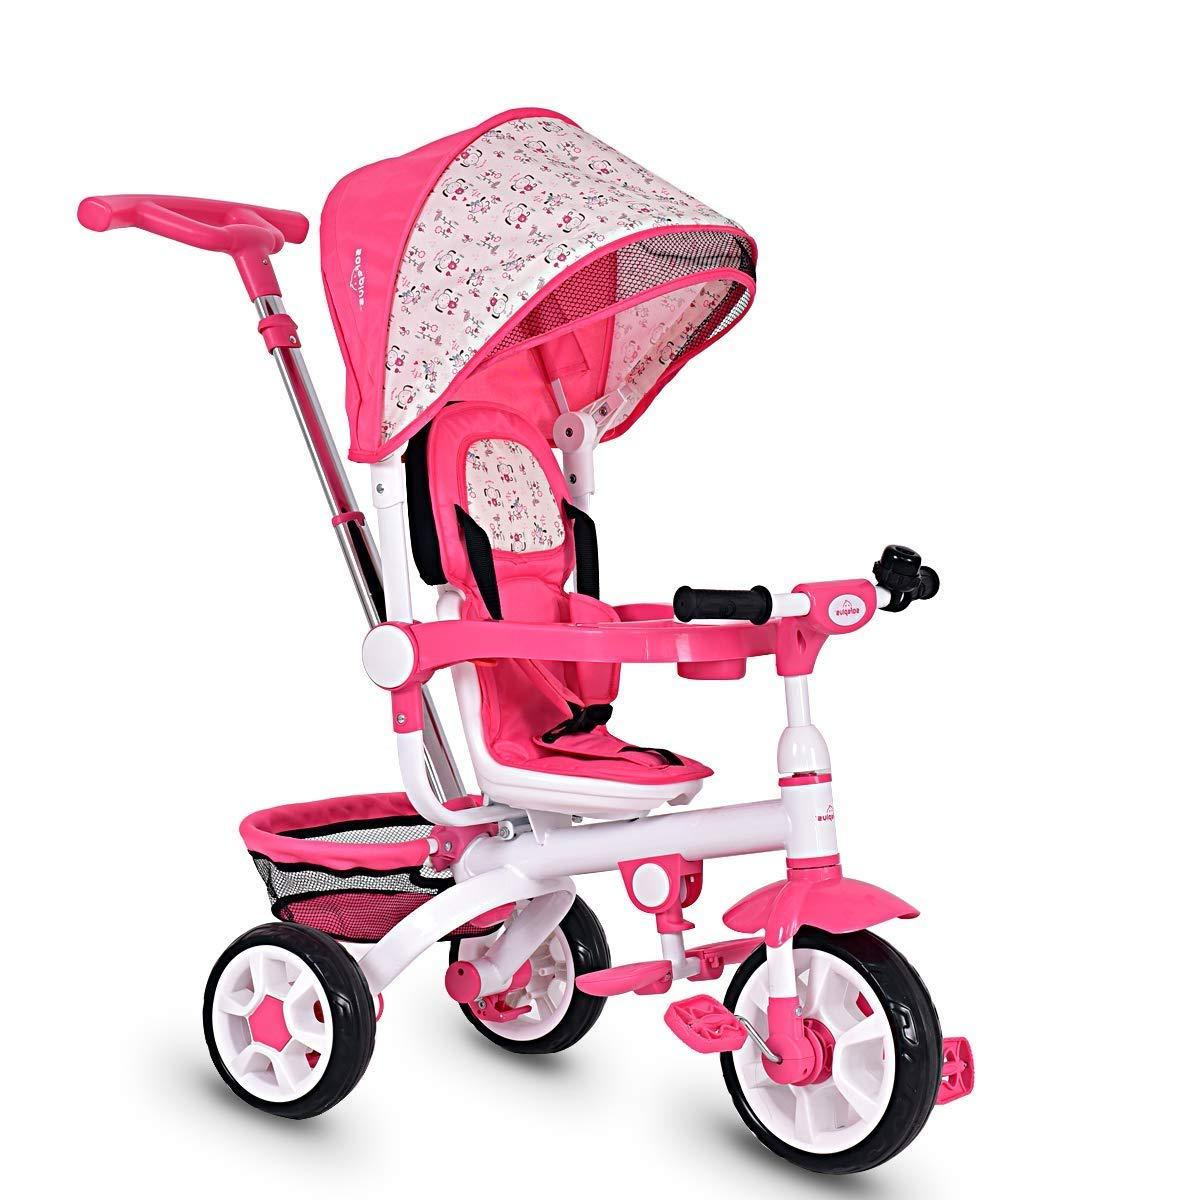 honey joy tricycle for toddlers, 4 in 1 baby stroll trike w/adjustable canopy & storage basket, detachable sponge guardrail, 